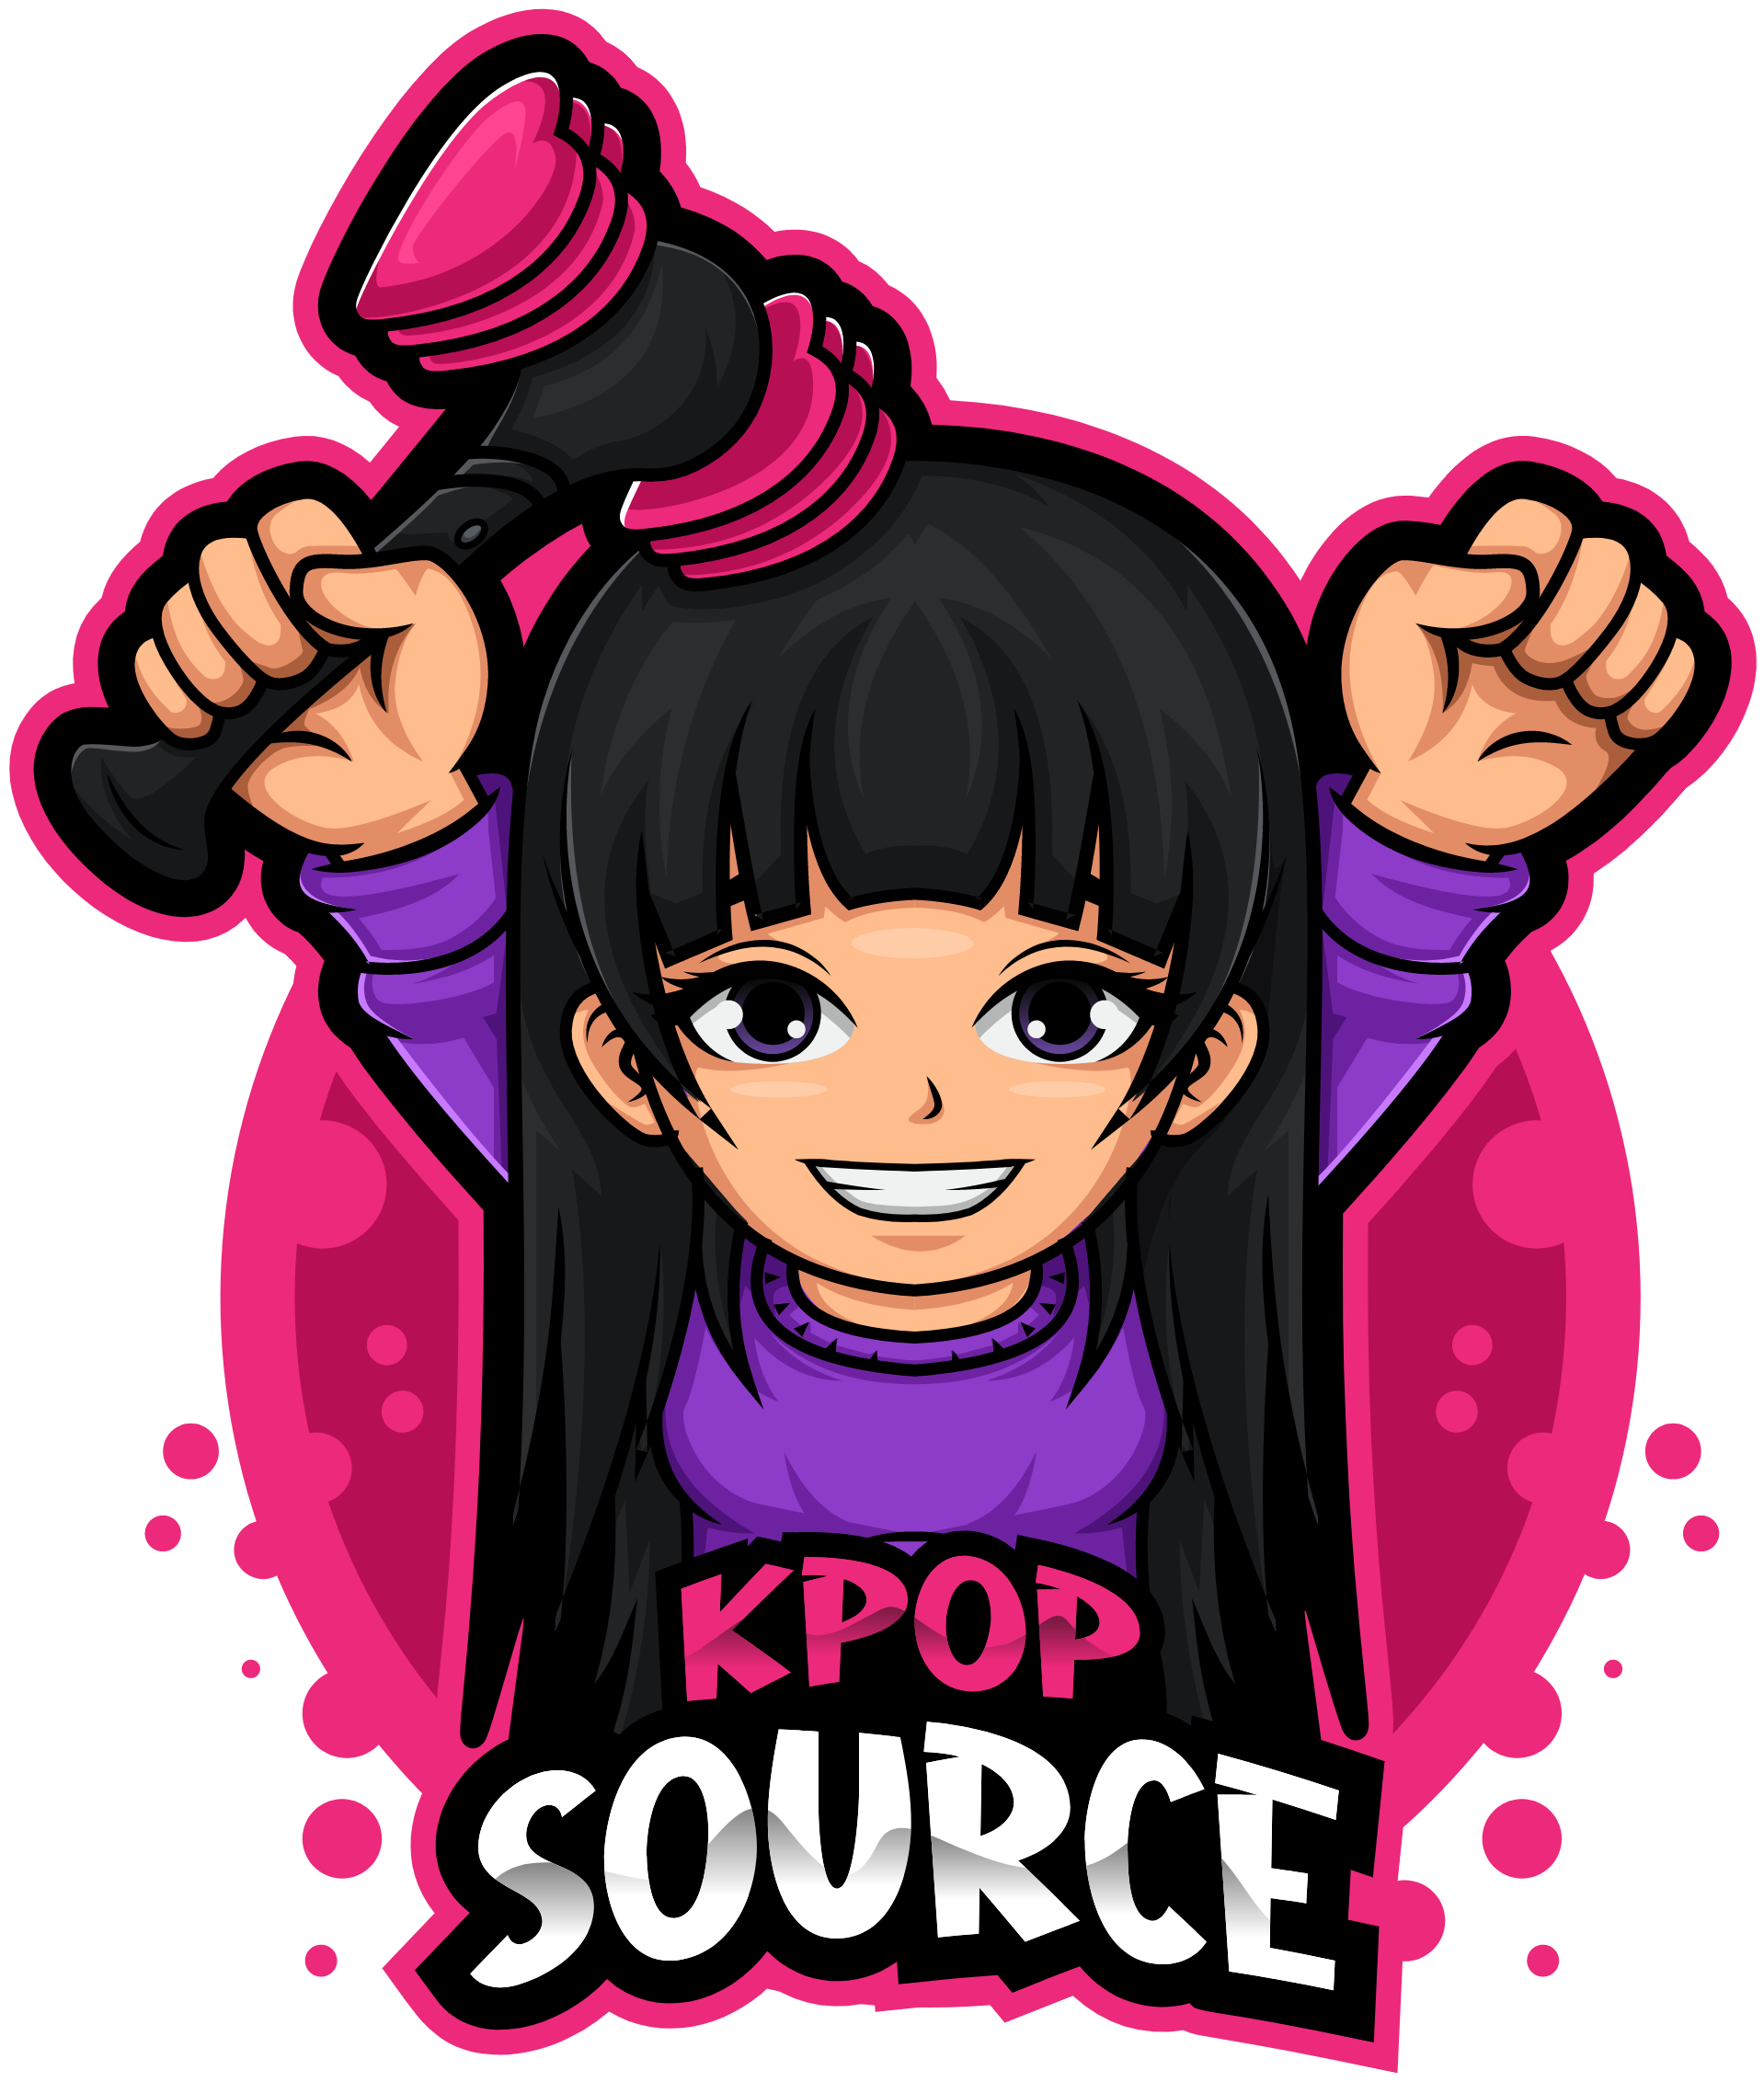 Kpopsource - International kpop forum community.